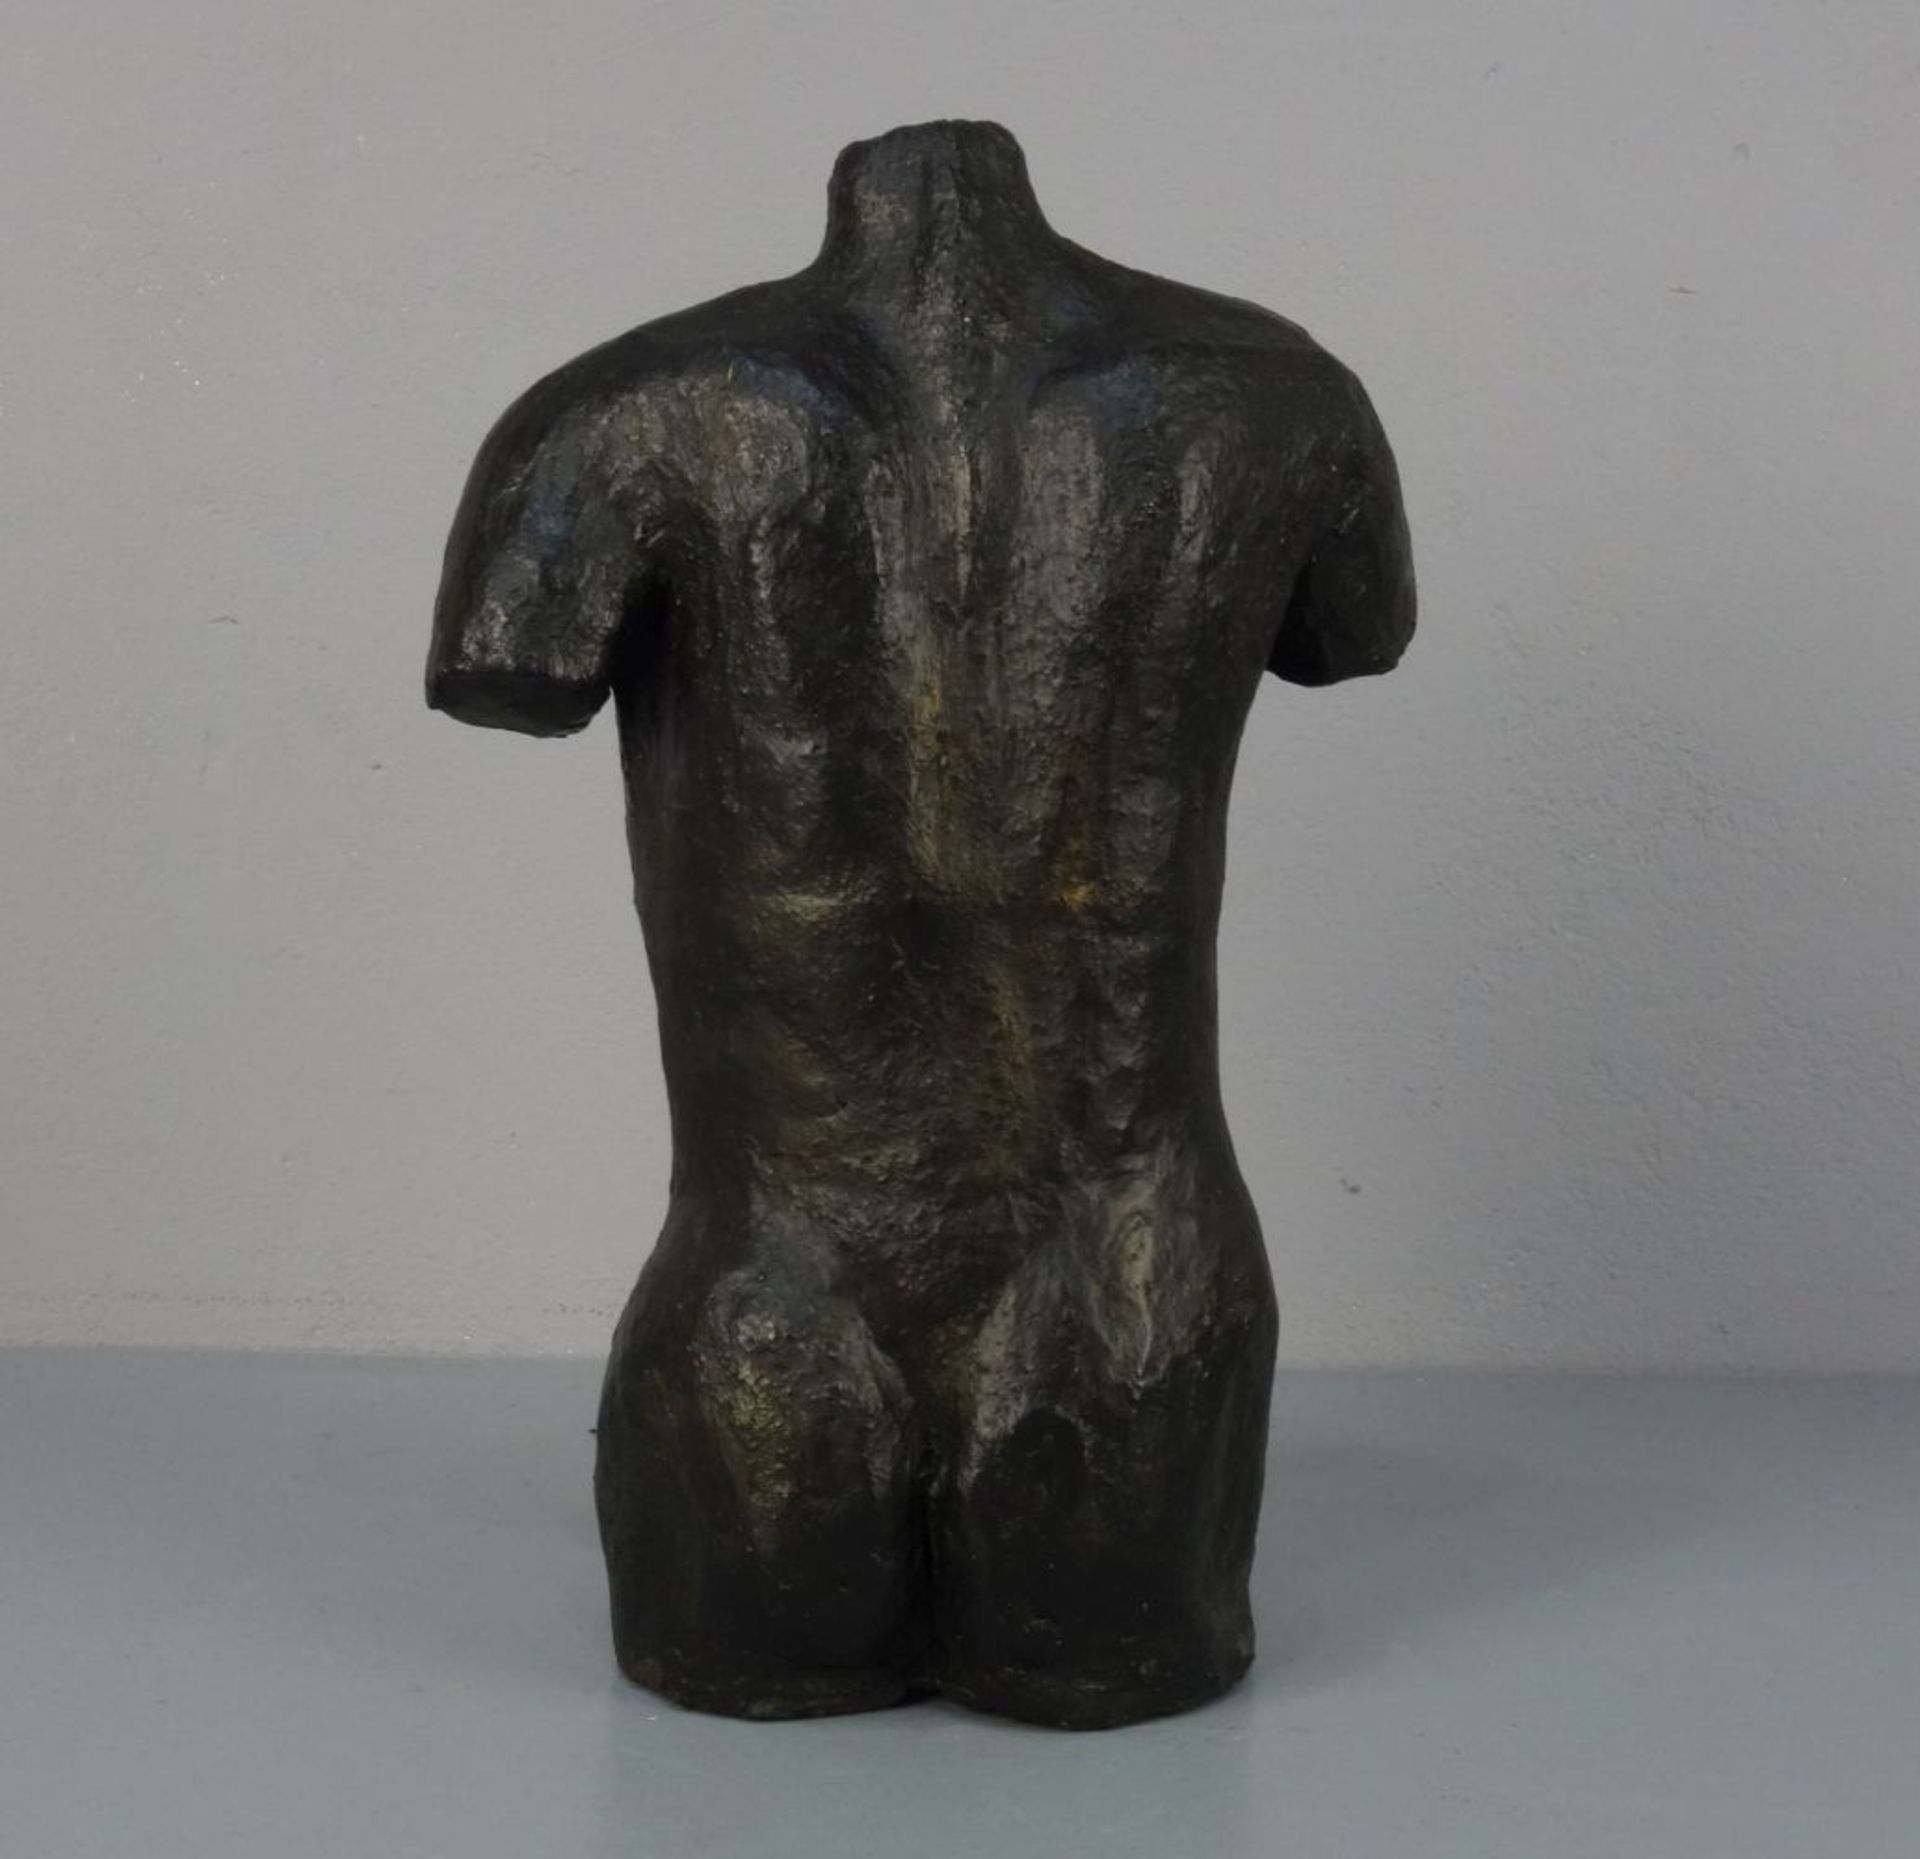 BILDHAUER / KERAMIKER DES 20./21. Jh.: Skulptur / sculpture: "Männlicher Torso", Keramik, - Image 3 of 5